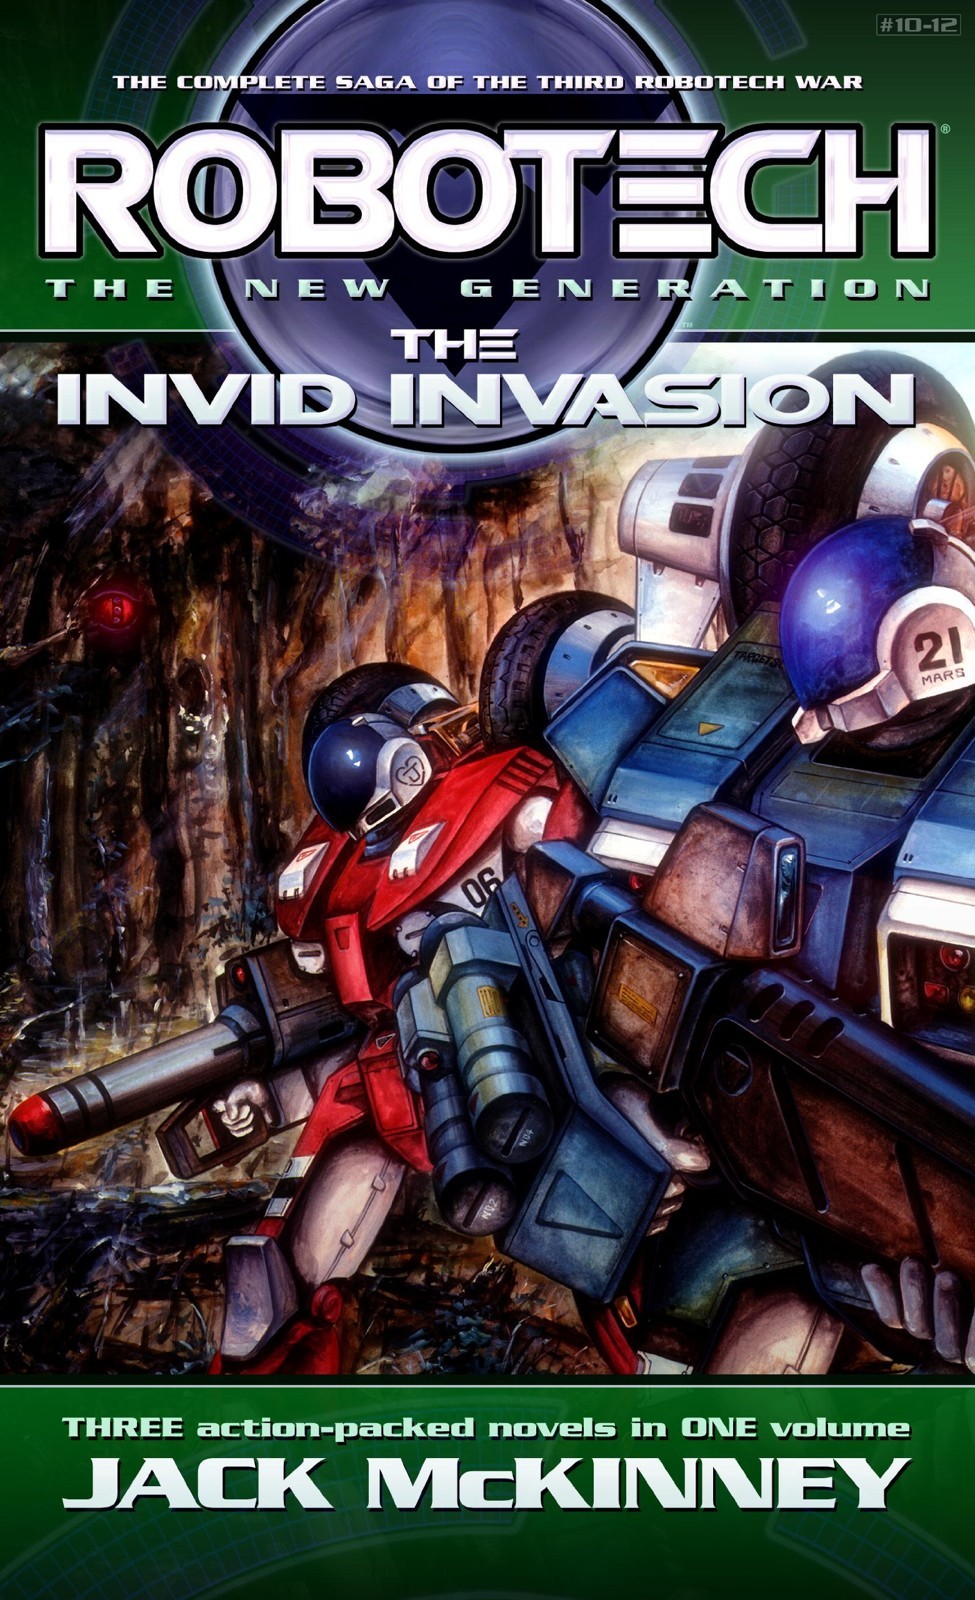 Robotech #10 Invid Invasion